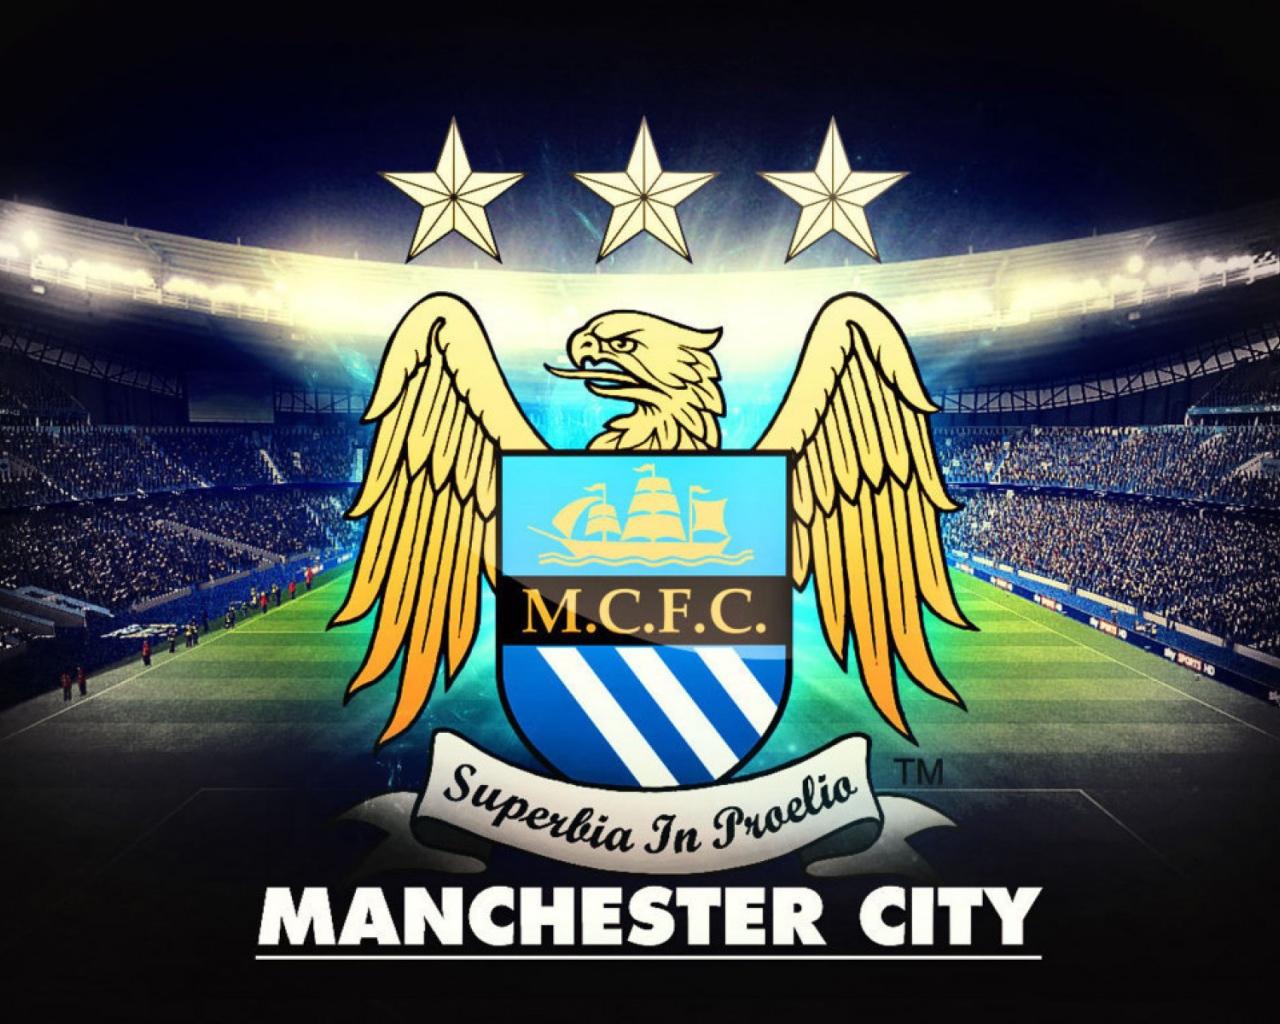 Beloved Football club Manchester City